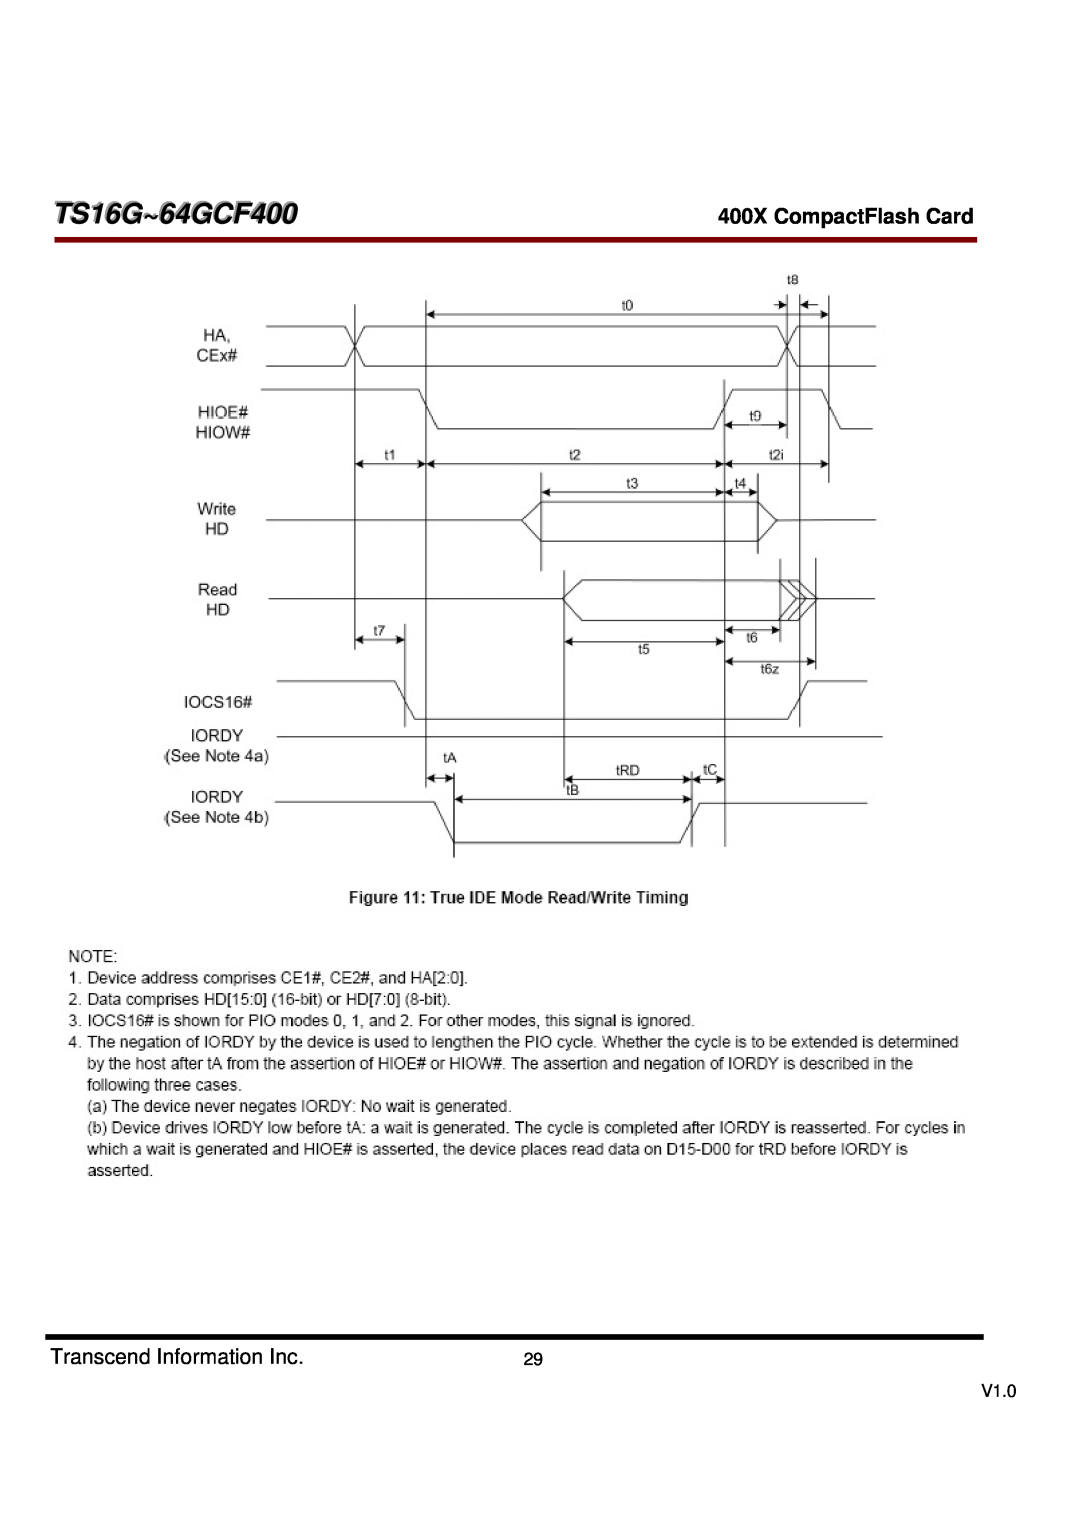 Transcend Information TS16G-64GCF400 dimensions TS16G~64GCF400, Transcend Information Inc, 400X CompactFlash Card 